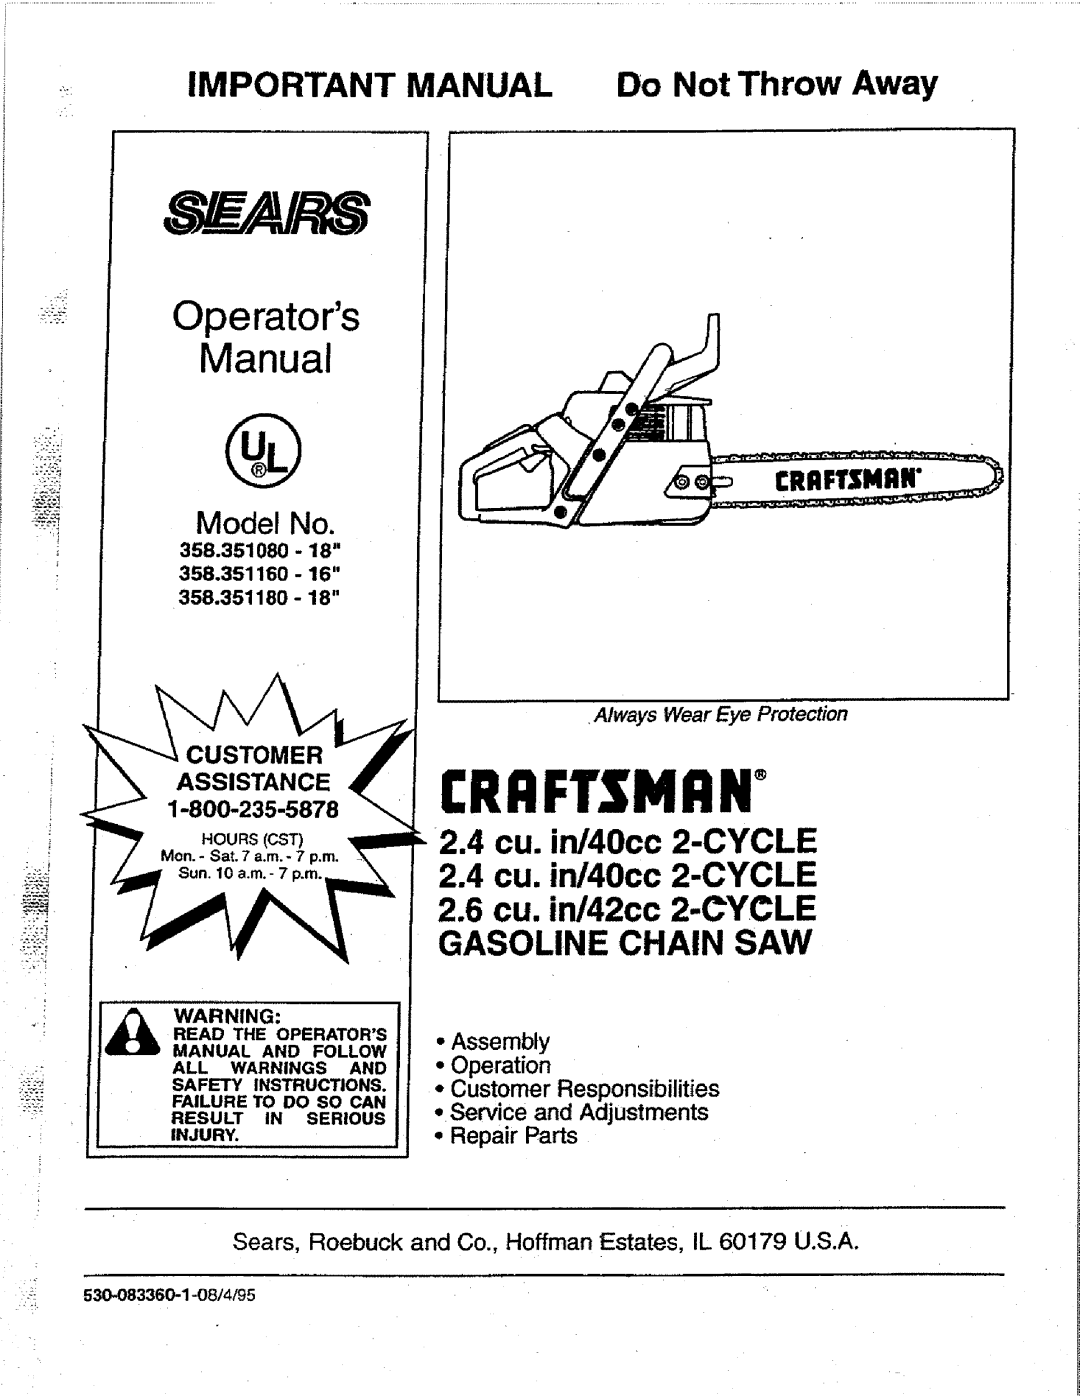 Sears 358.351160-16 manual Operators Manual, 2.4cu. in/40cc 2-CYCLE, Model No, Crrftsmrn, 2.4 cu. in/40cc 2-CYCLE 